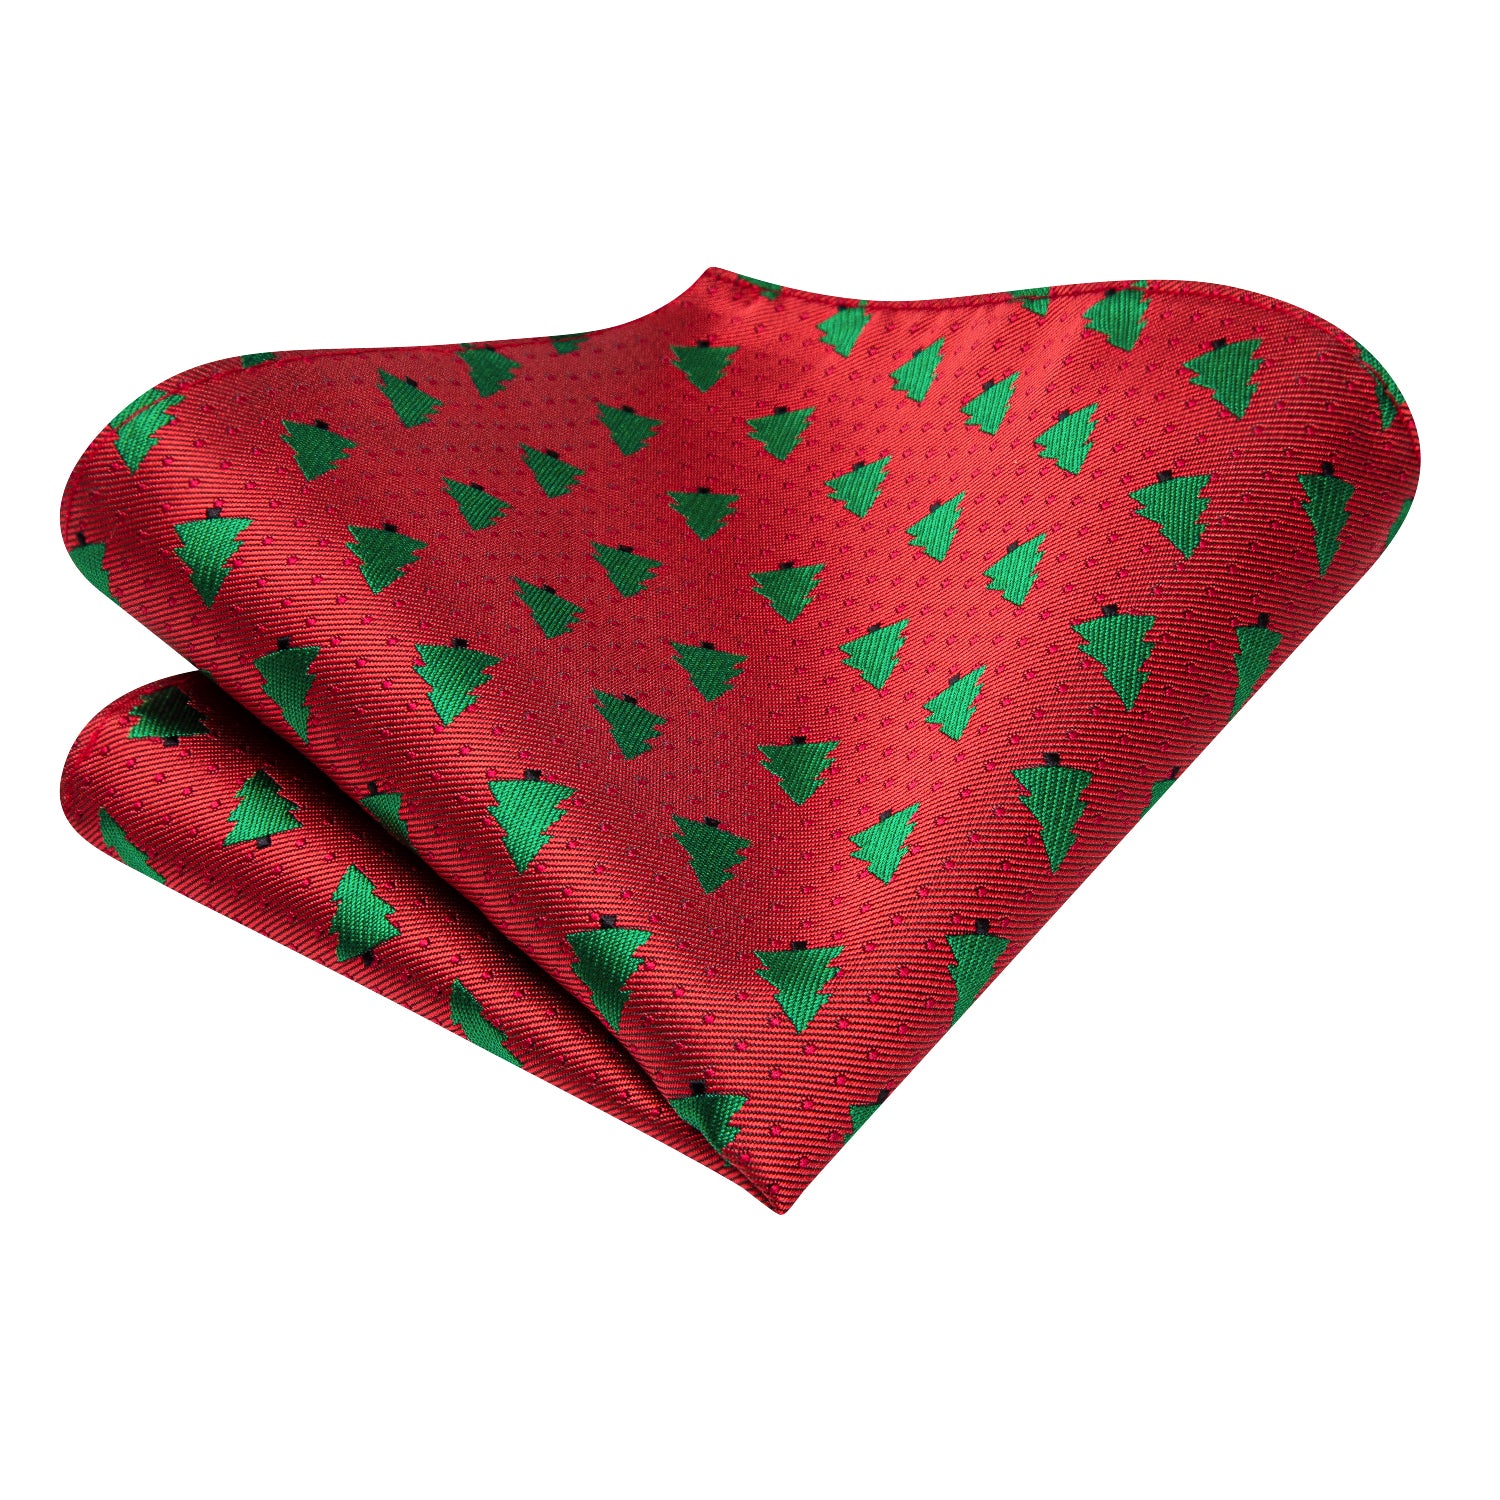 Red Green Pines Tie Pocket Square Cufflinks Set